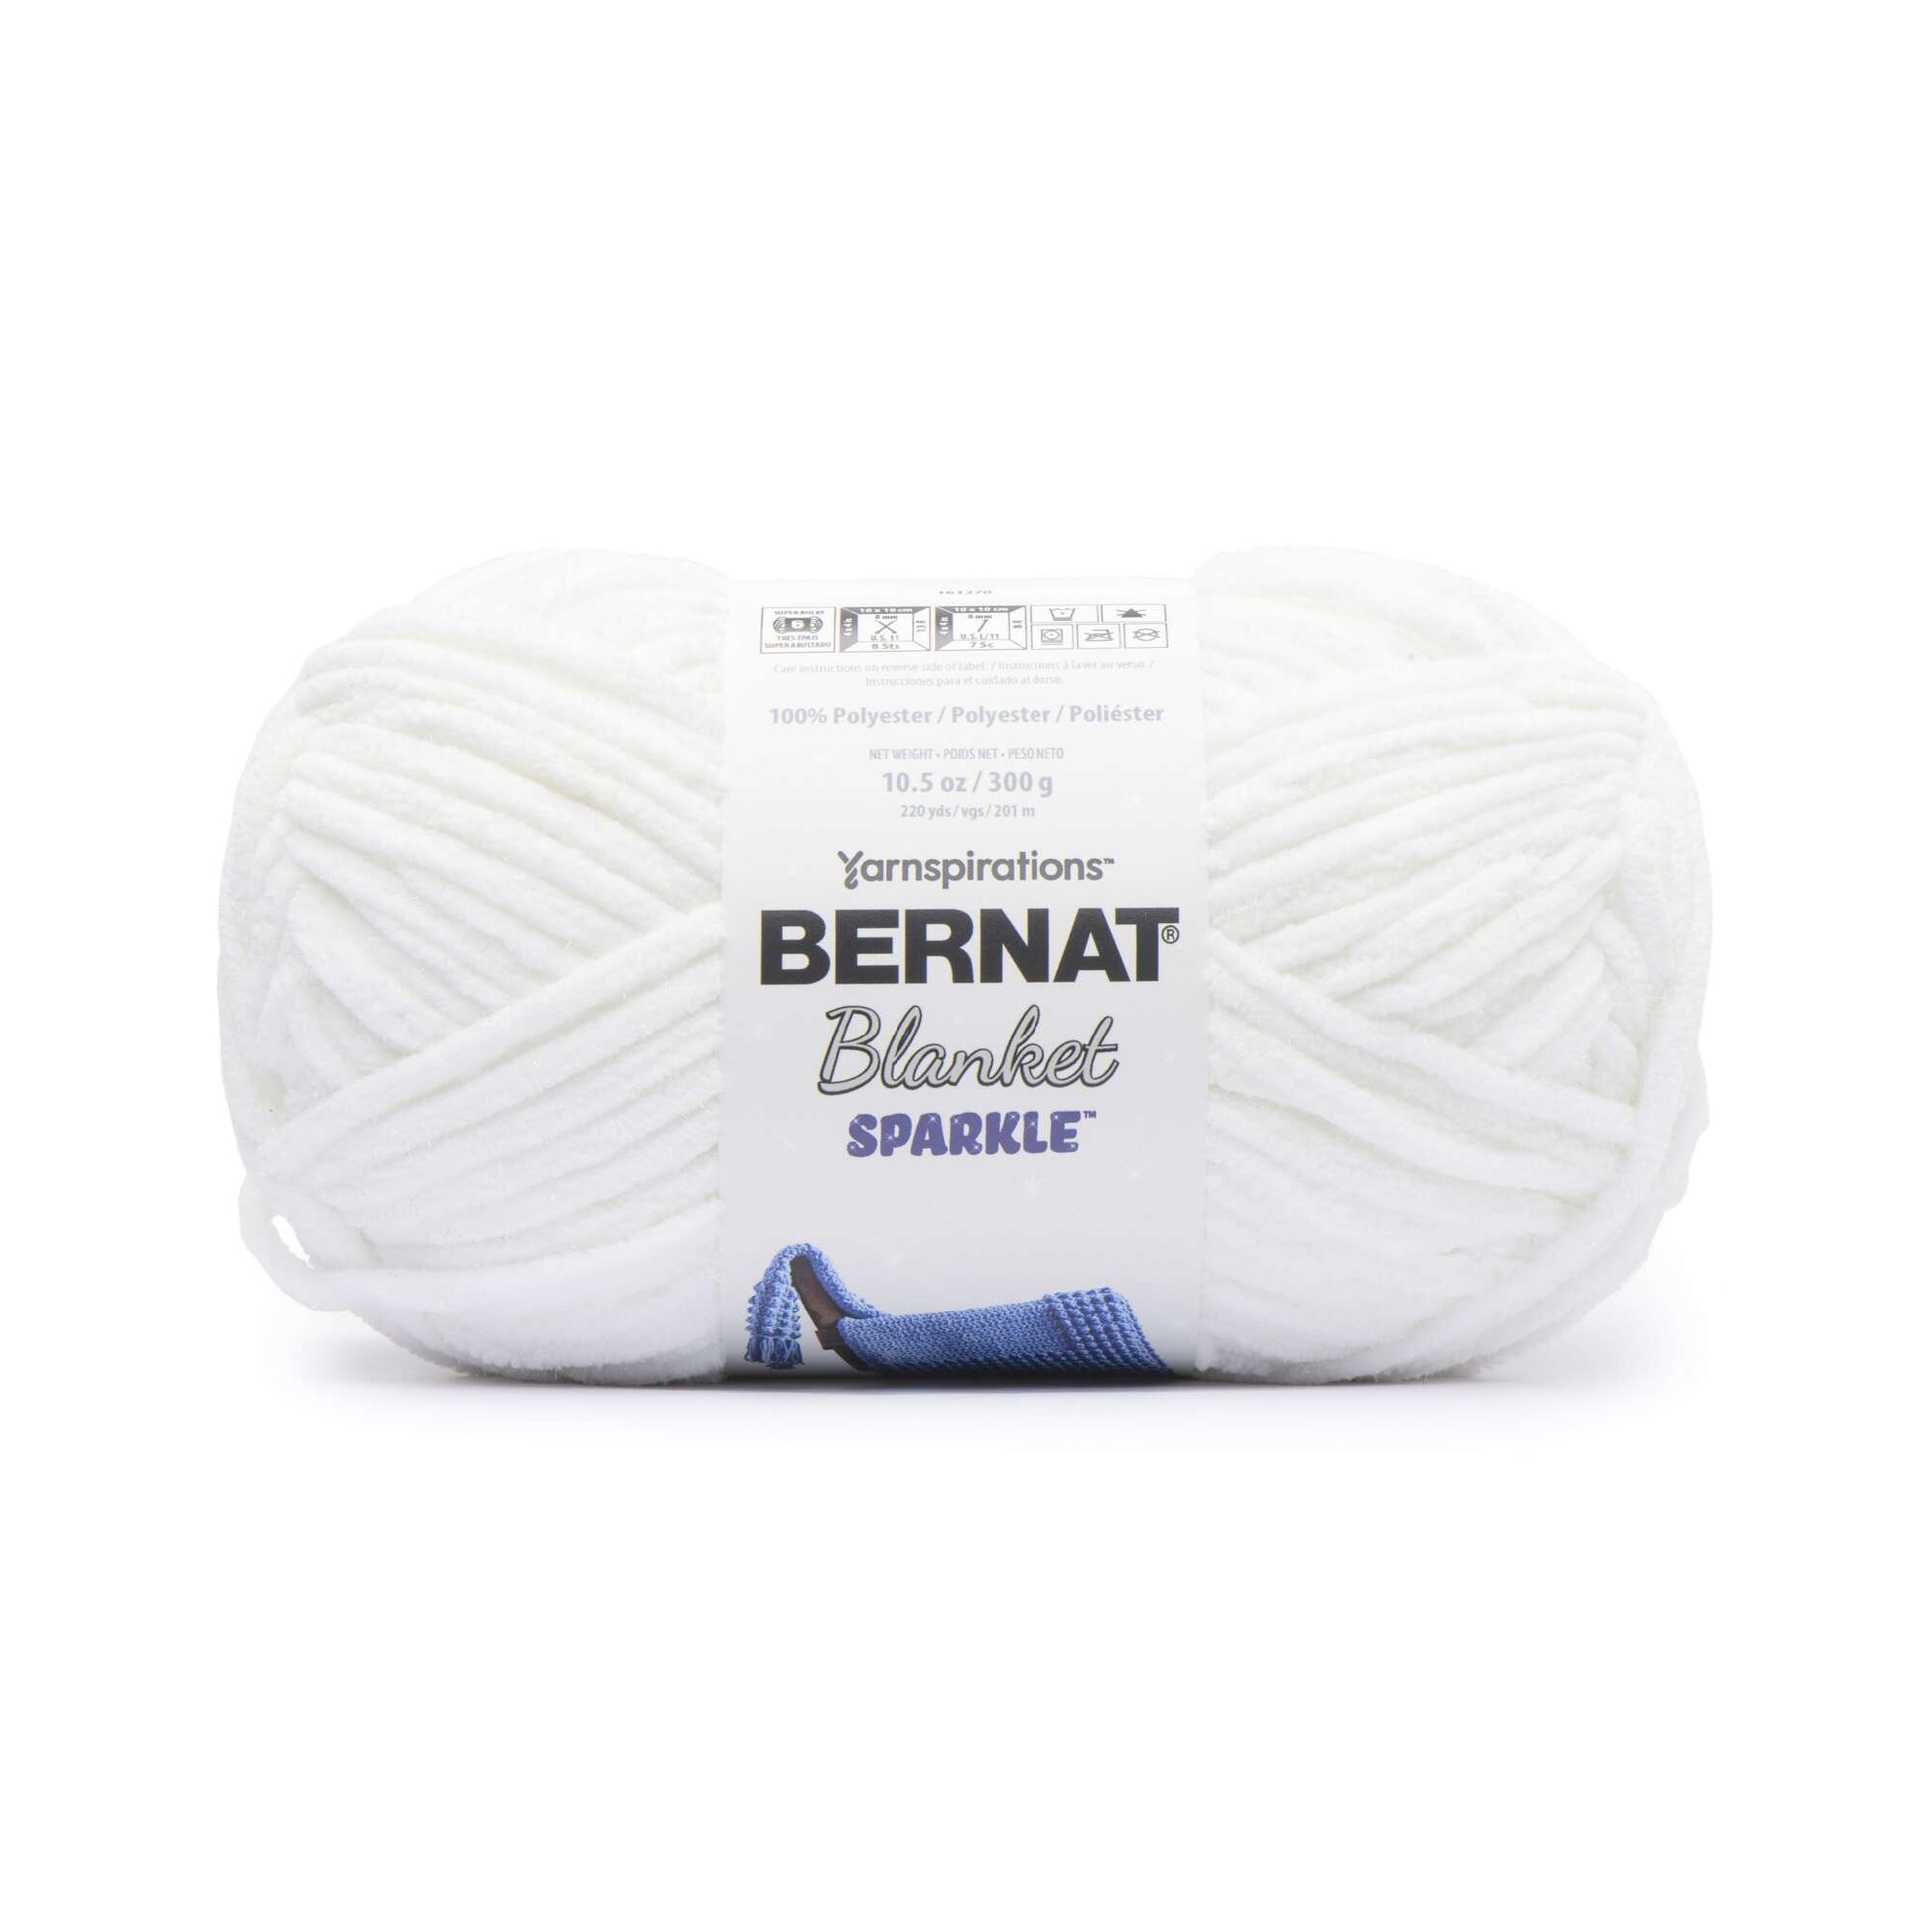 Bernat Baby Blanket Sparkle #6 Super Bulky Polyester Yarn, Hot Pink 10.5oz/300g, 220 Yards (4 Pack)